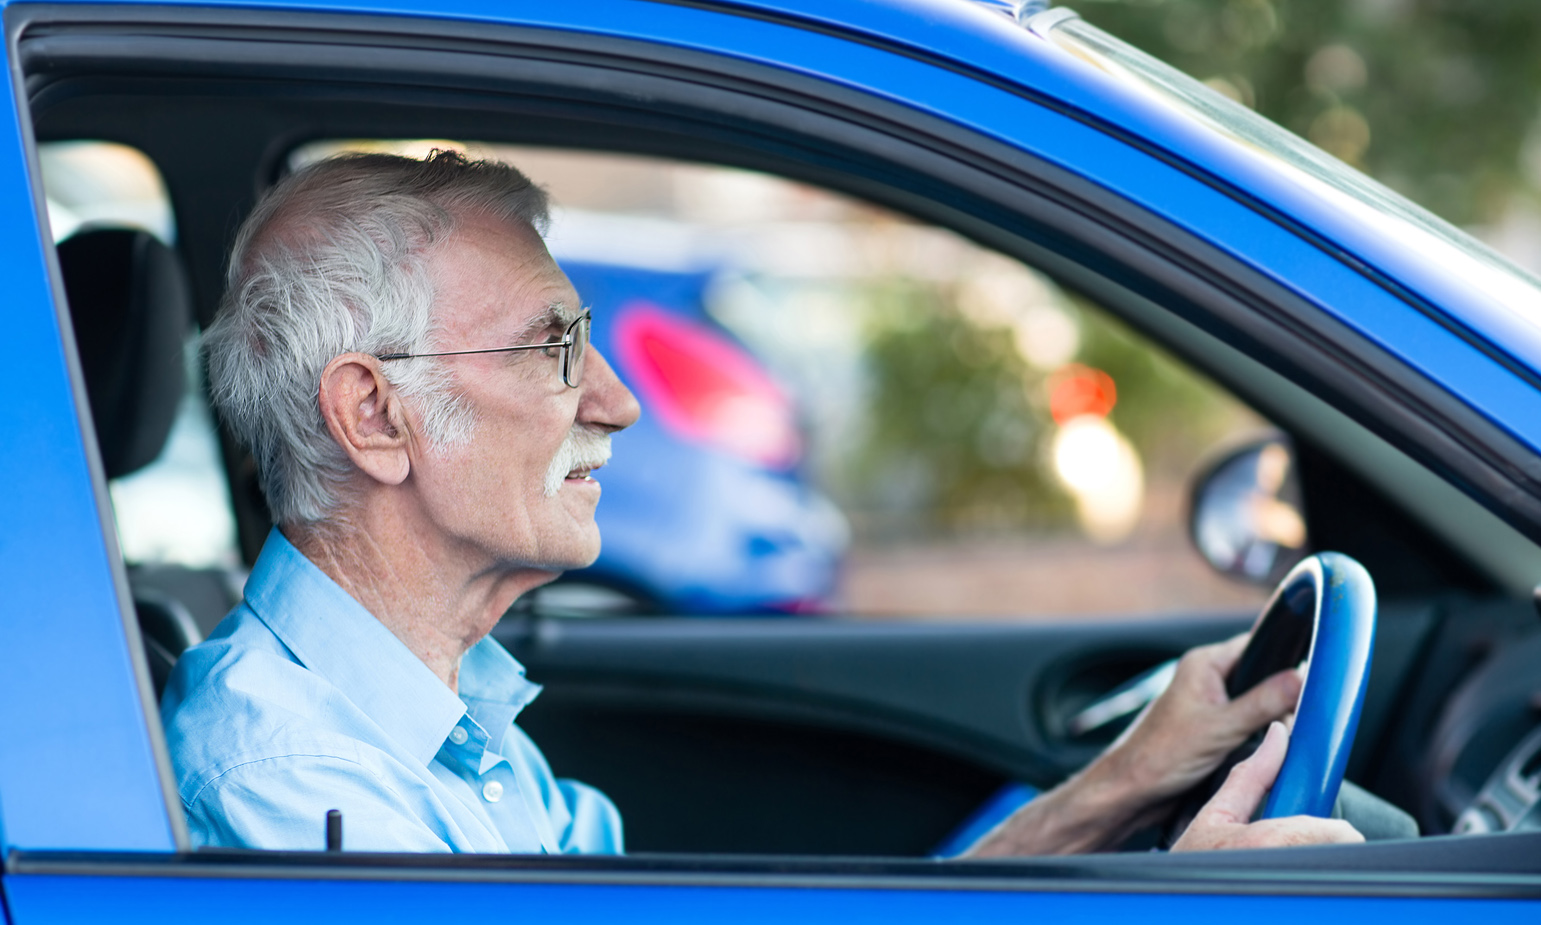 Profile view through open passenger window of older man clutching steering wheel of car